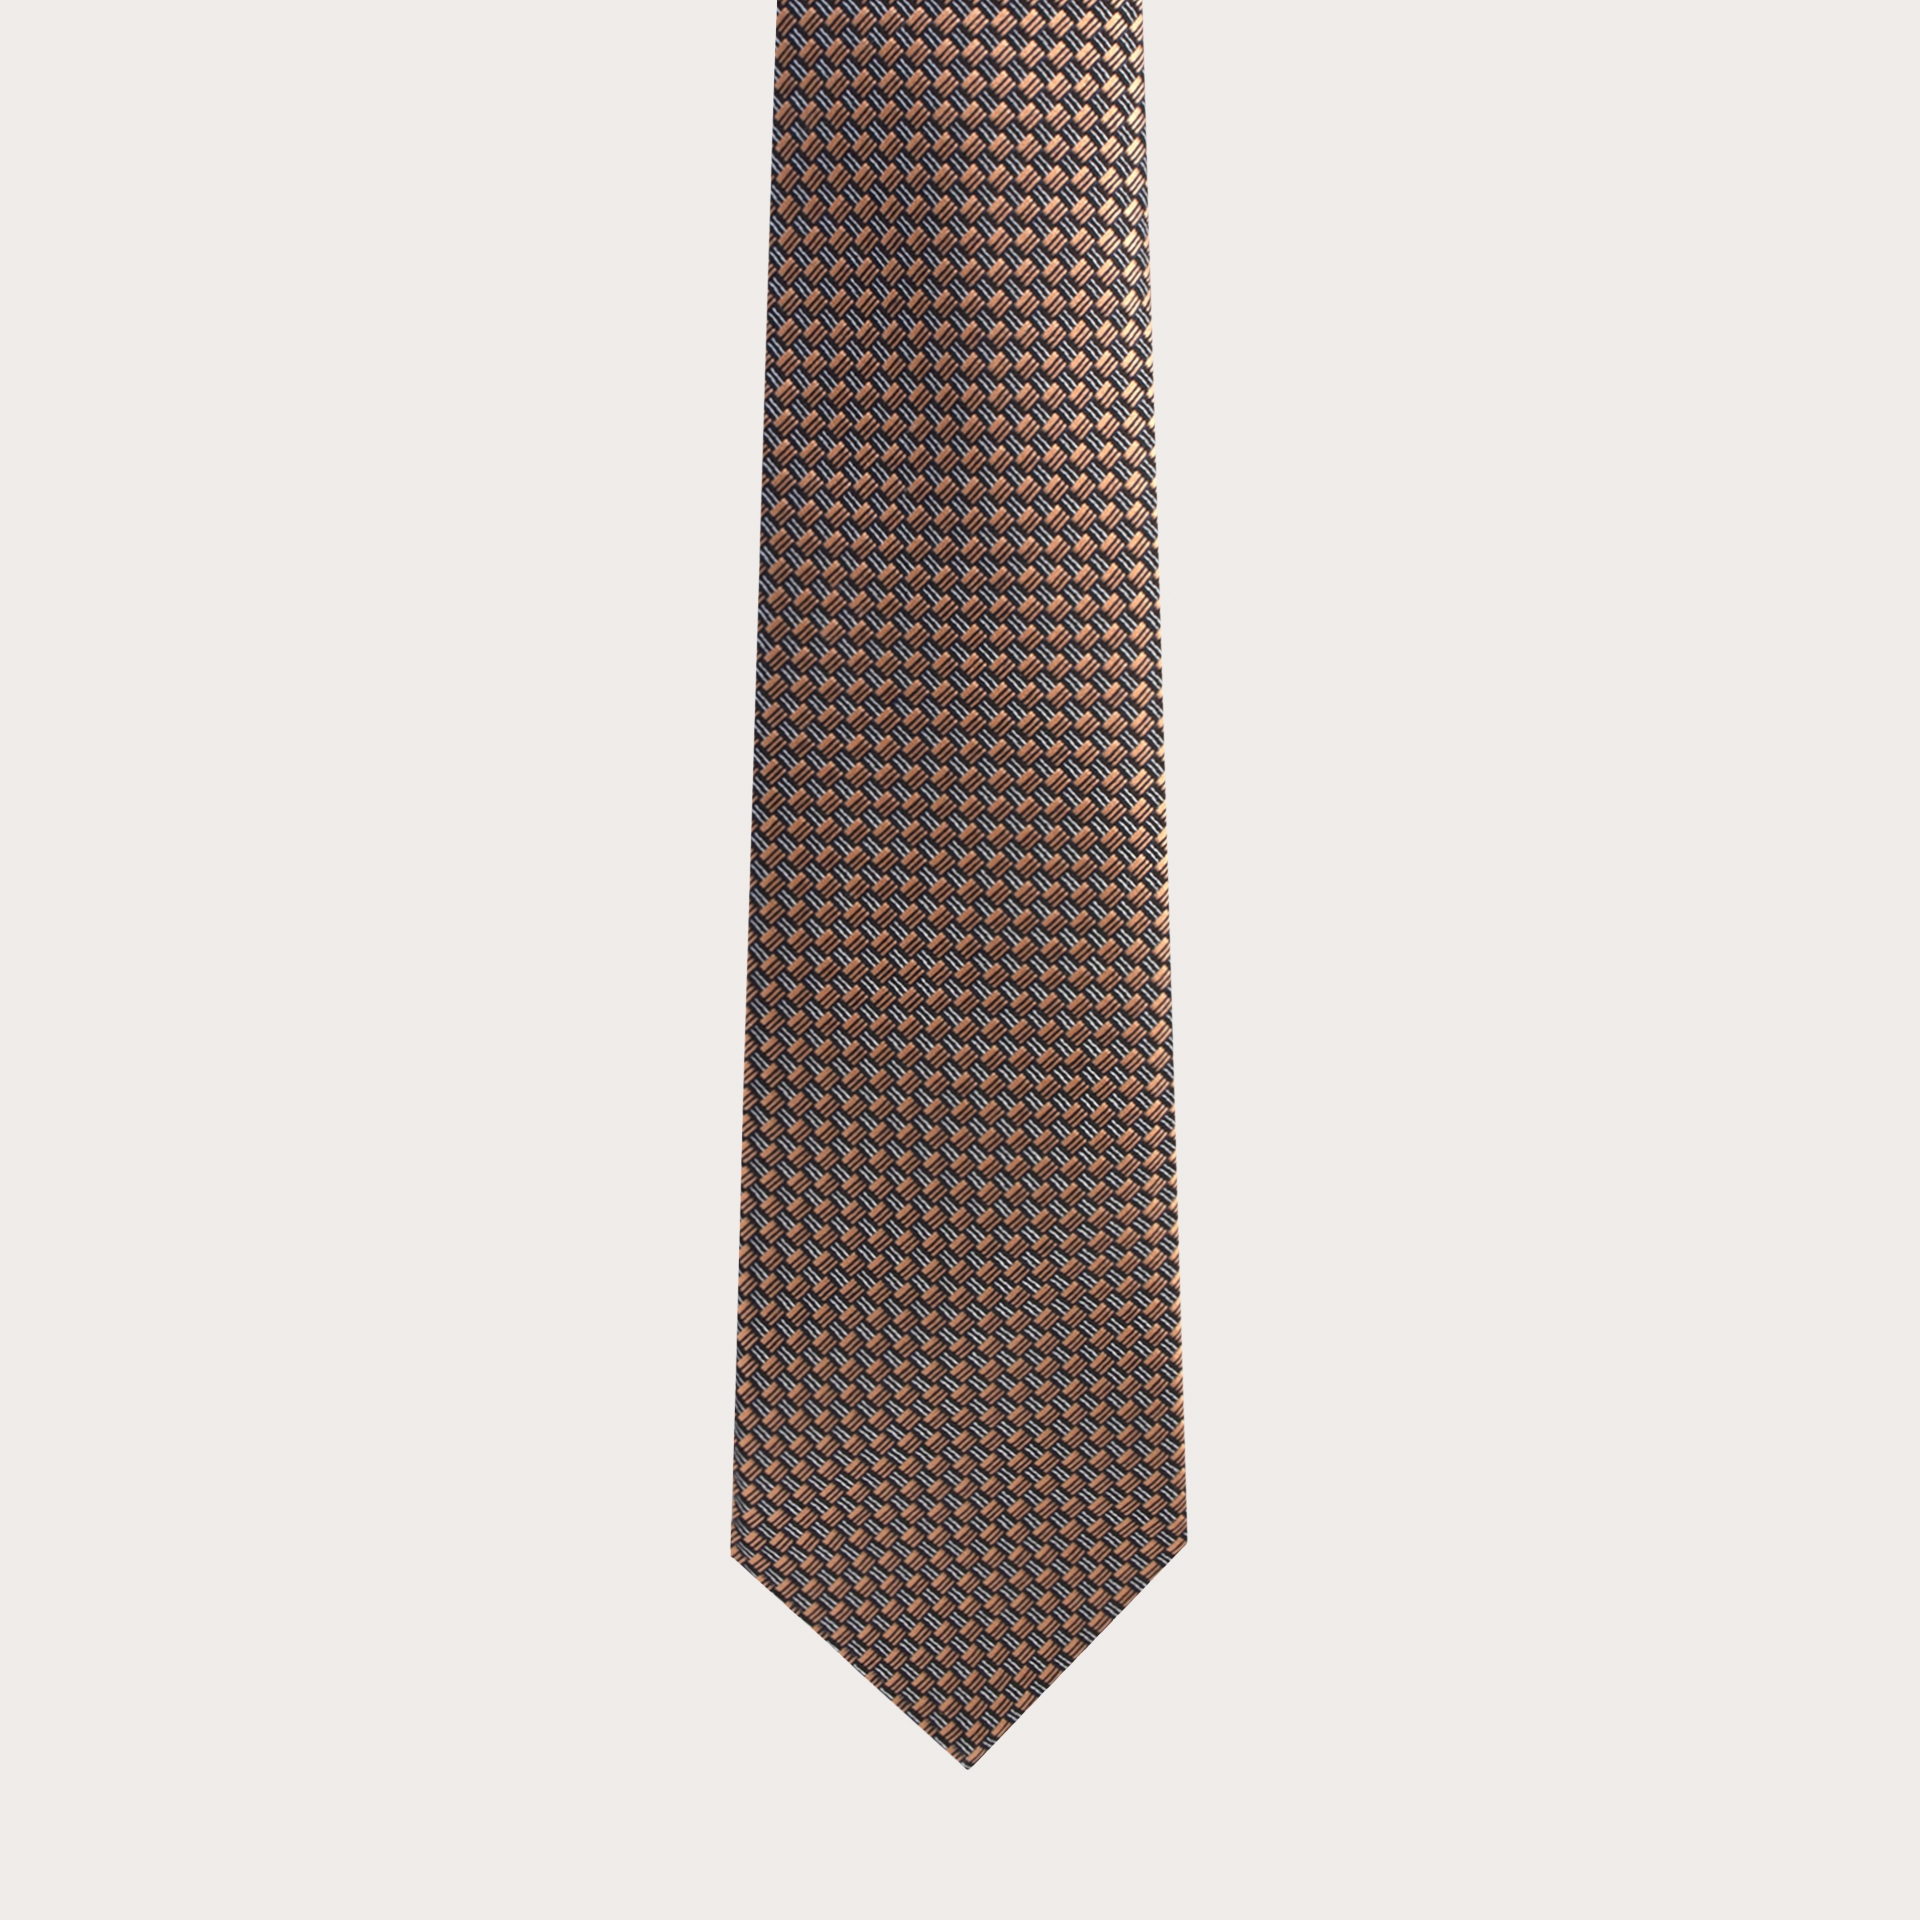 BRUCLE Corbata elegante en jacquard de seda, estampado bronce